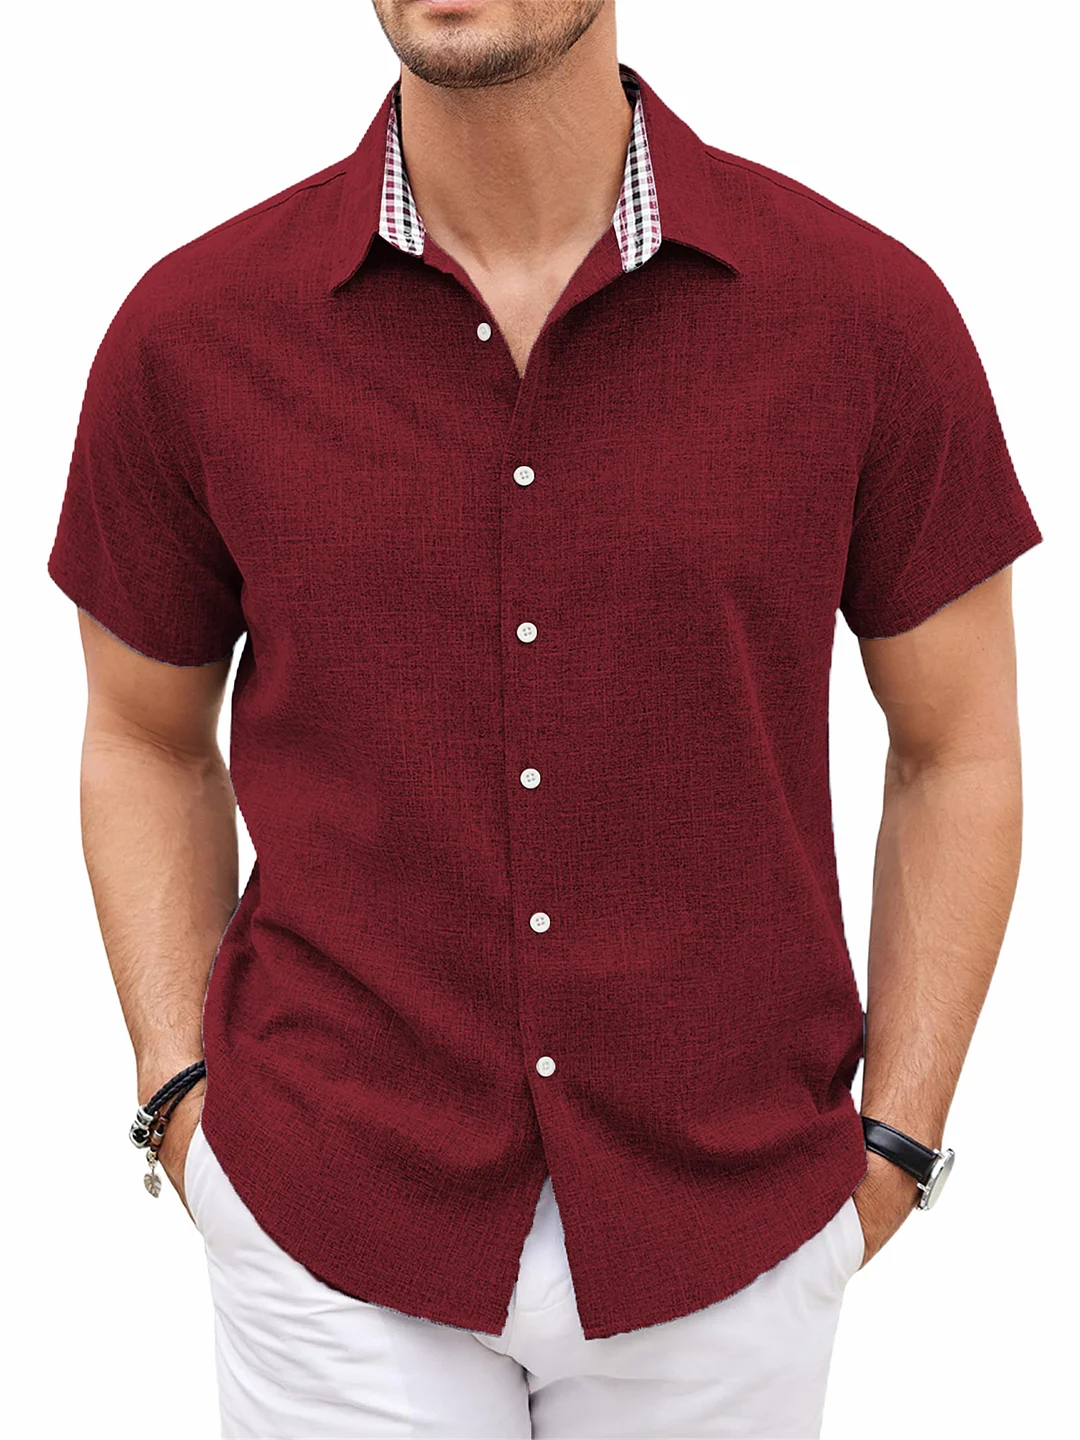 Suitmens Mens Linen Shirt Short Sleeve Button Down Shirts Casual Plaid Collar Summer Beach Shirts